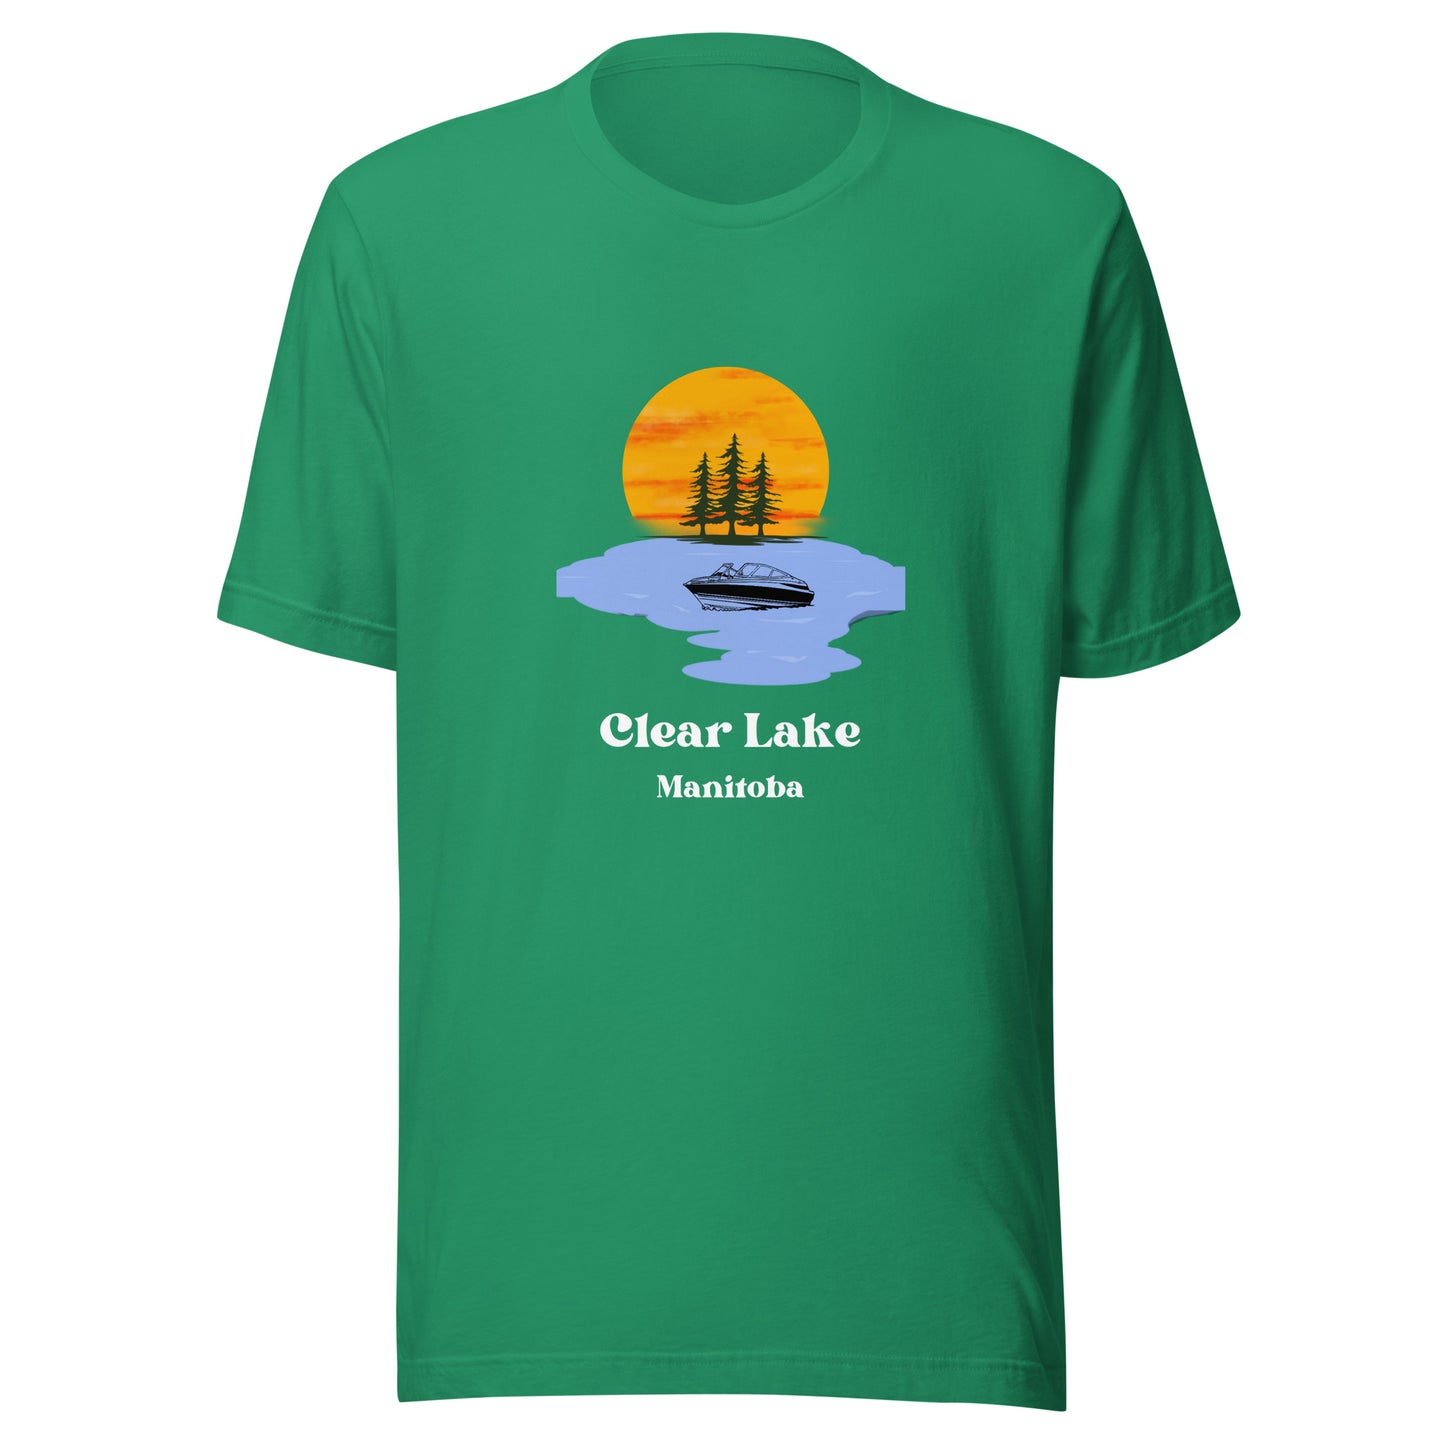 Clear Lake, MB - T-Shirt Ski Boat